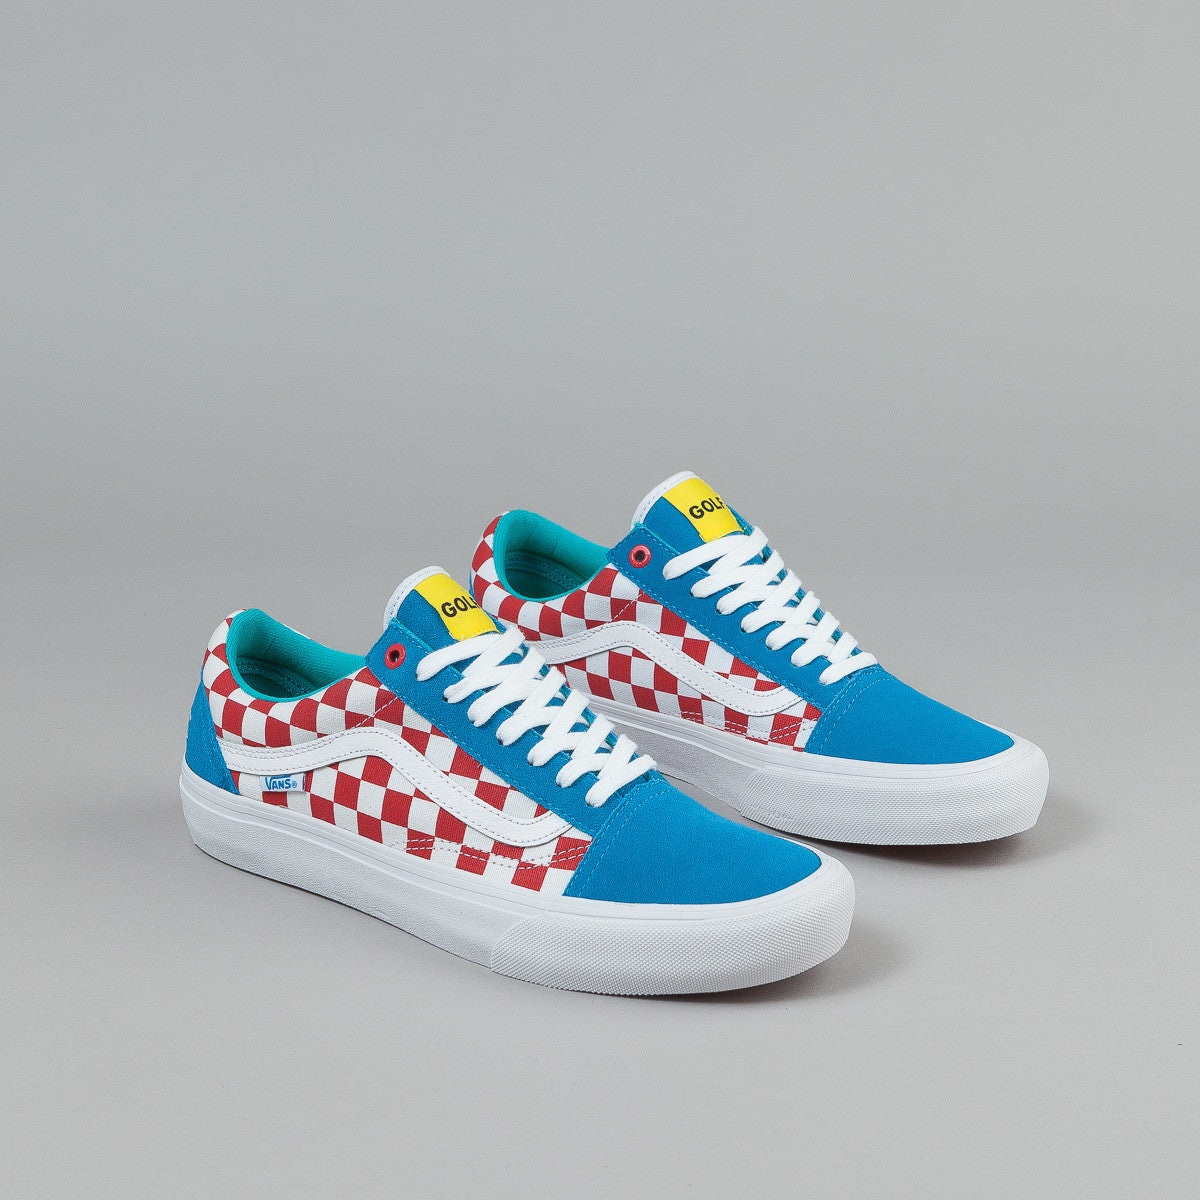 Vans Old Skool Pro Shoes (Golf Wang) - Blue / Red / White | Flatspot